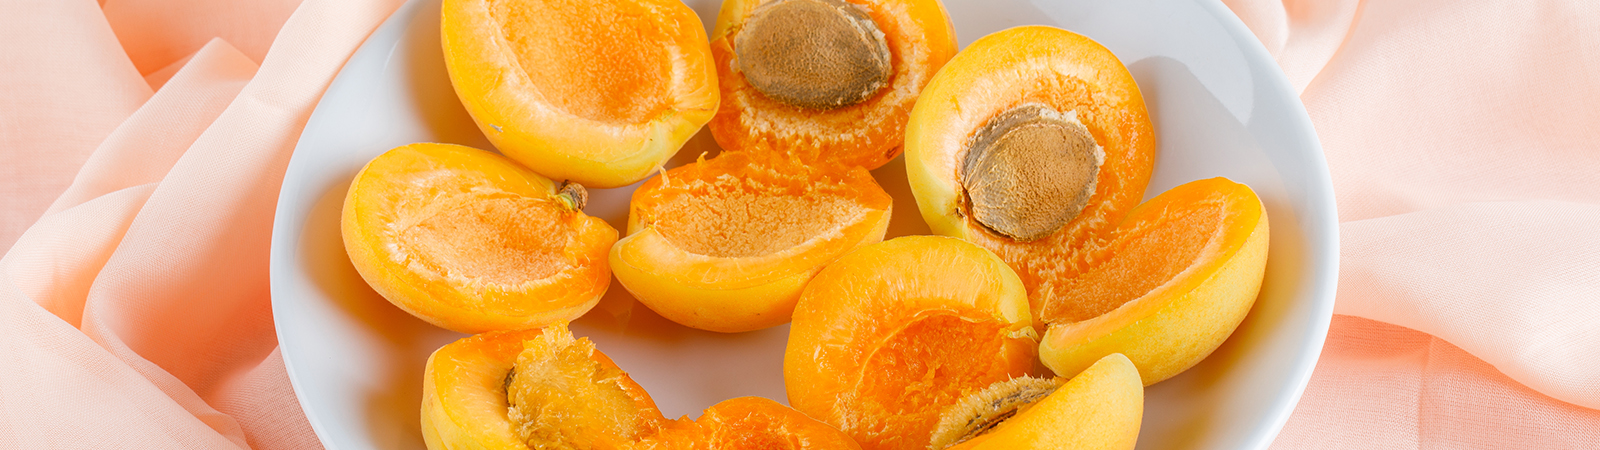 Apricot Kernels